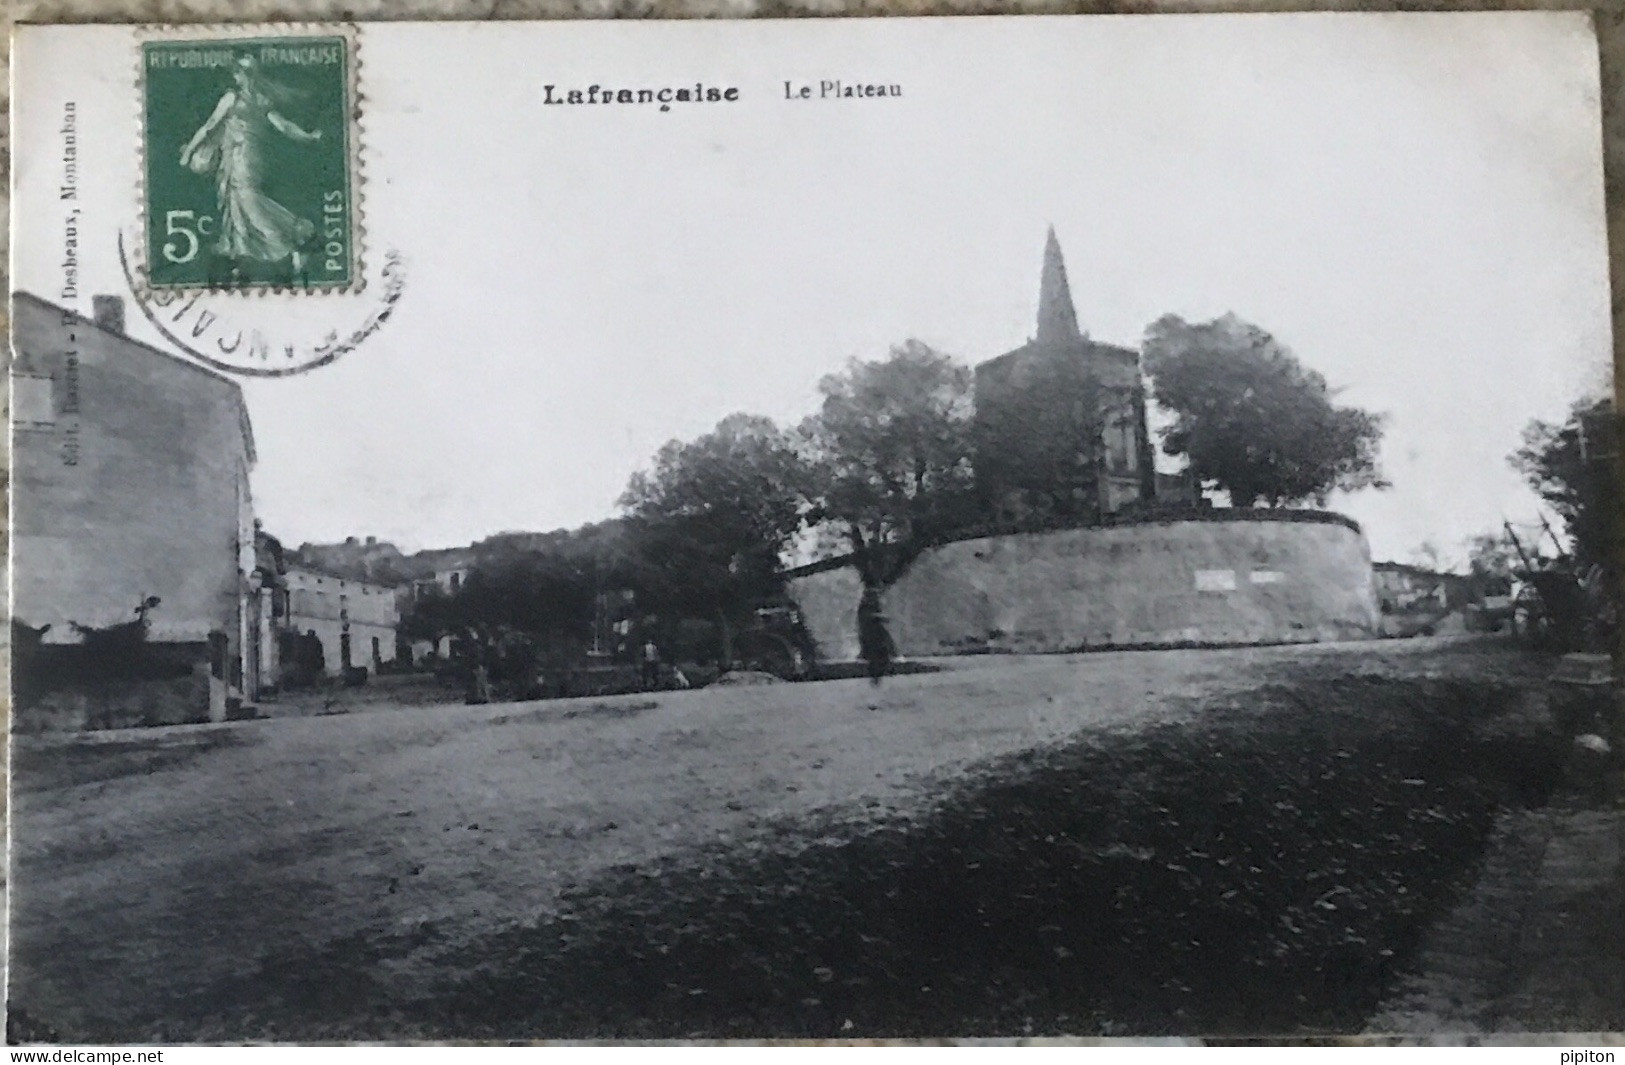 Le Plateau - Lafrancaise